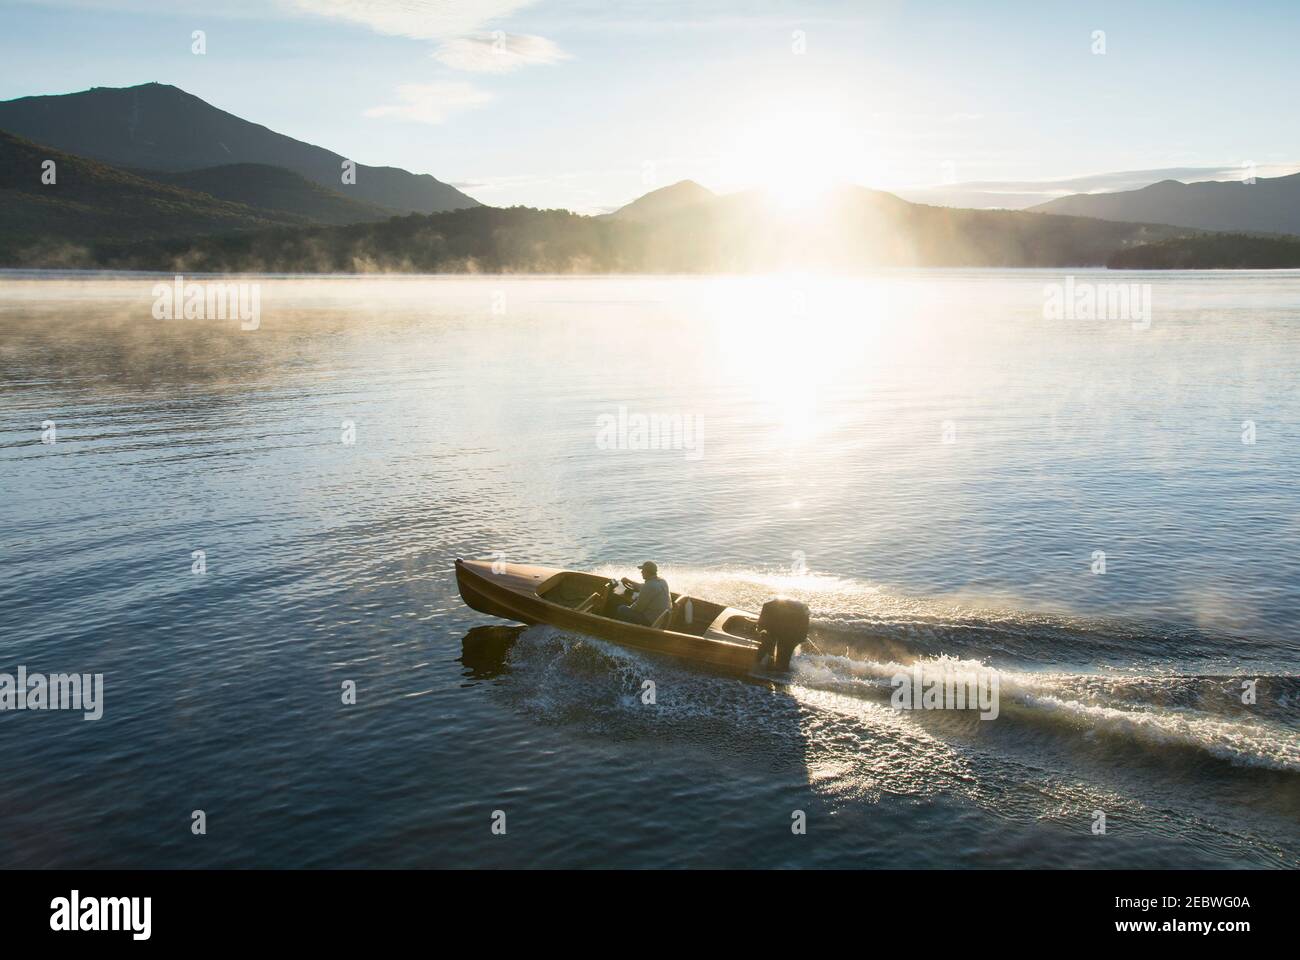 USA, New York, Lake Placid, Man in motorboat on Lake Placid Stock Photo